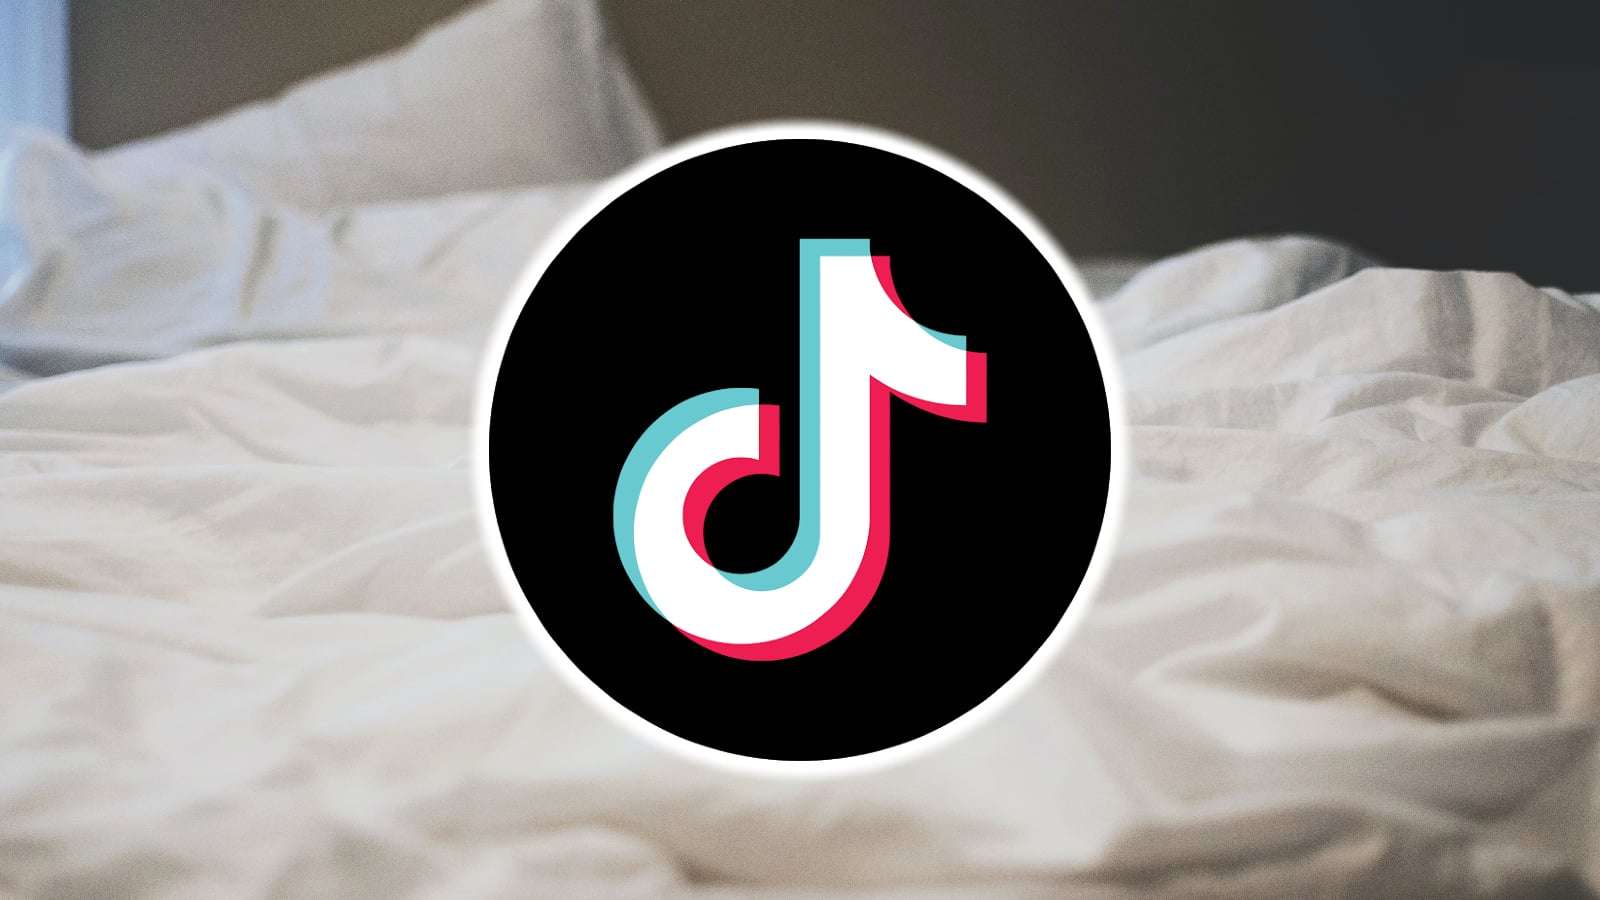 TikTok logo over bed sheets